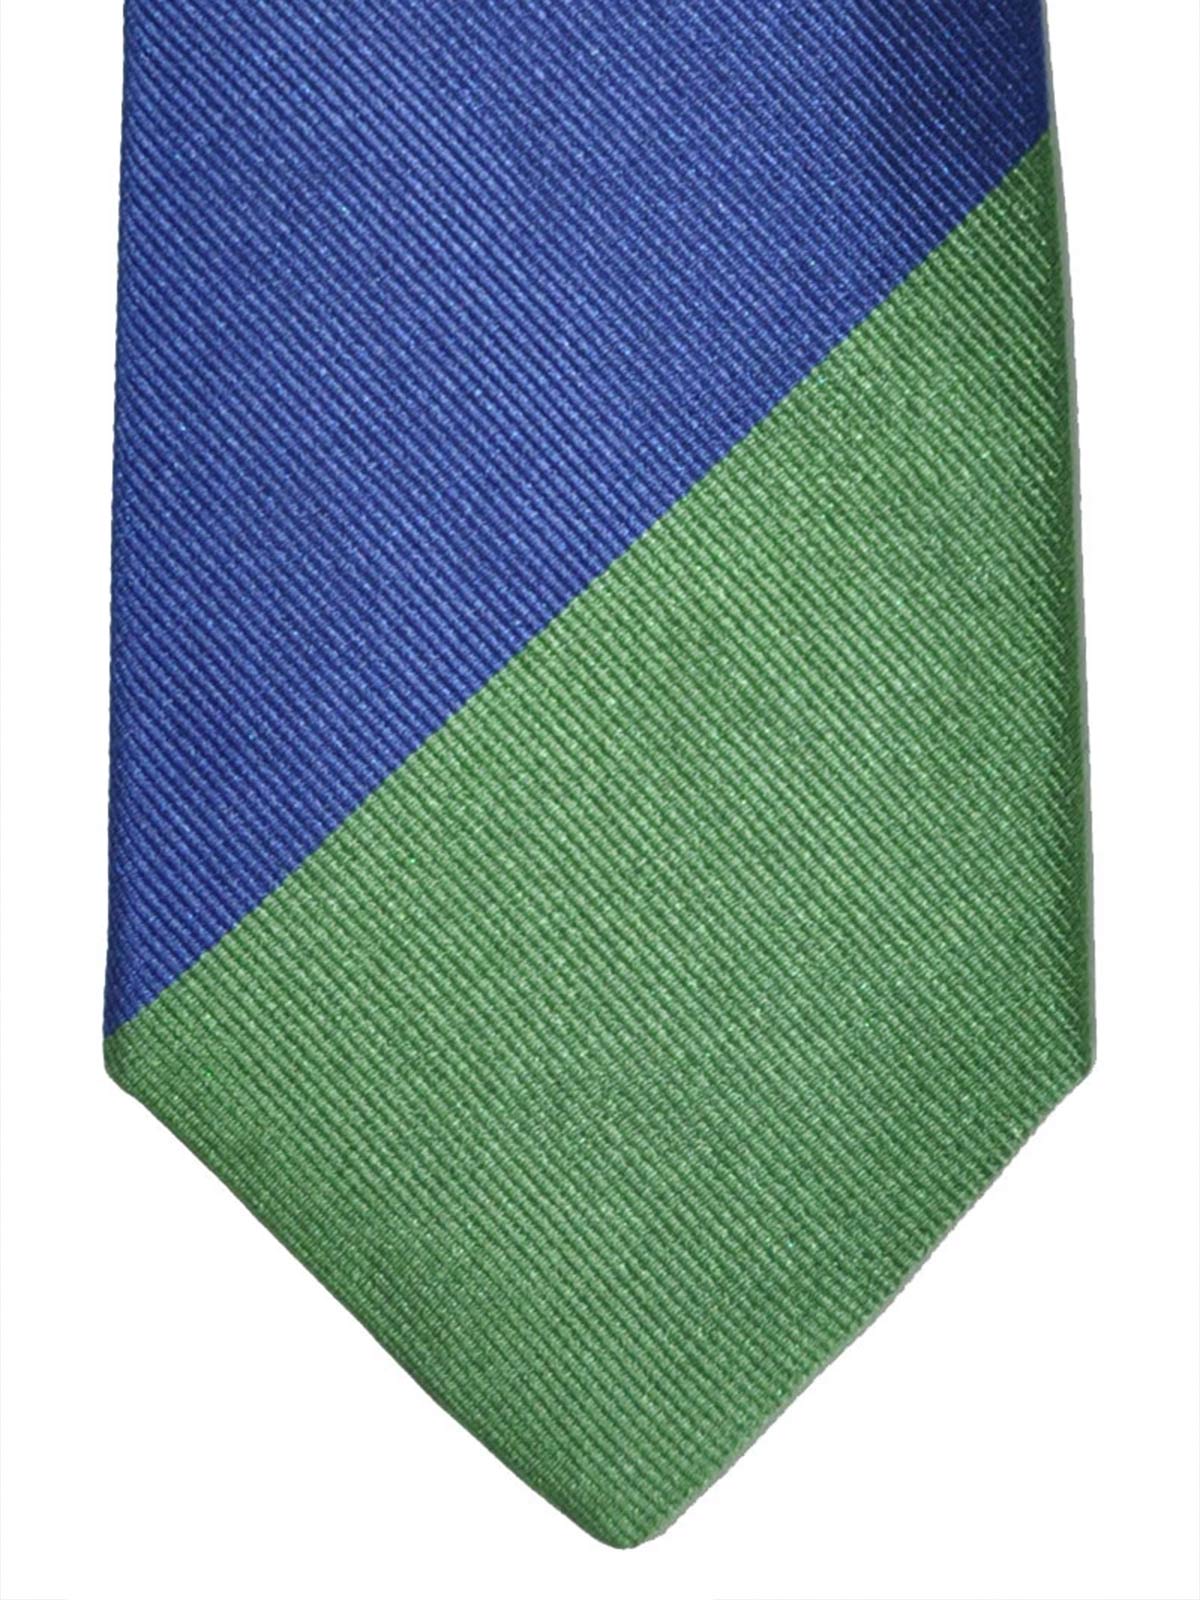 Gene Meyer Tie Royal Blue Pink Green SALE